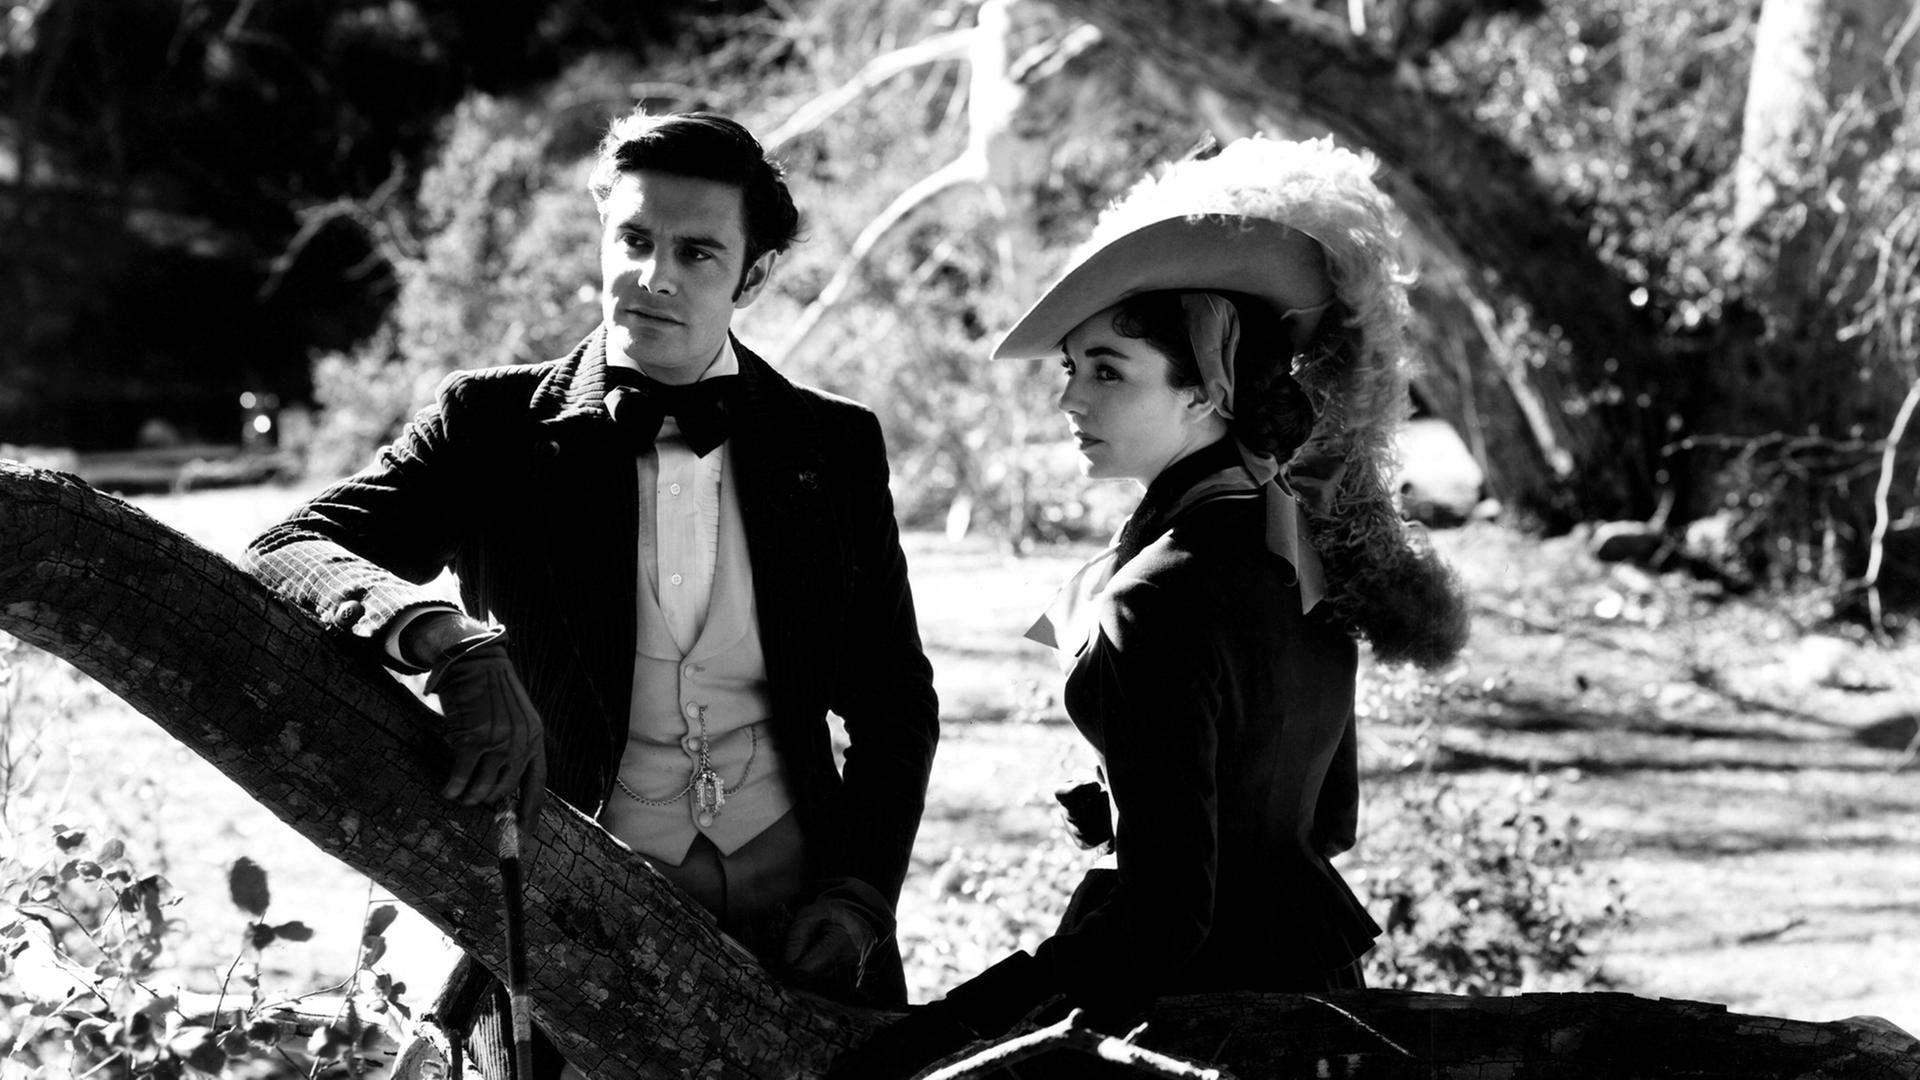 Madame Bovary - Szene aus dem Film mit Louis Jourdan und Jennifer Jones, 1949.